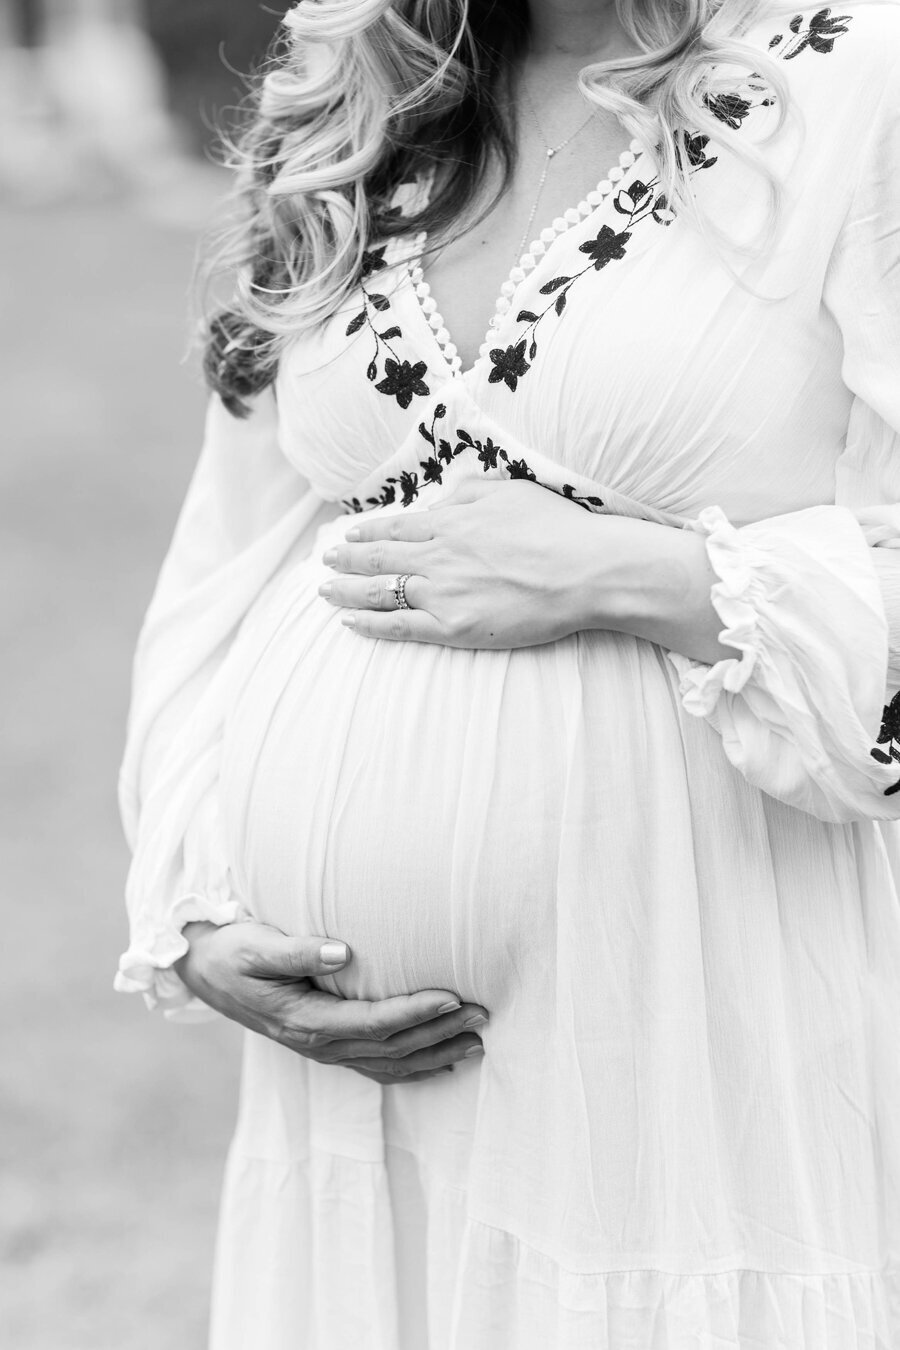 Richmond Maternity Photographer | Ashley Edmunds Photography - 08